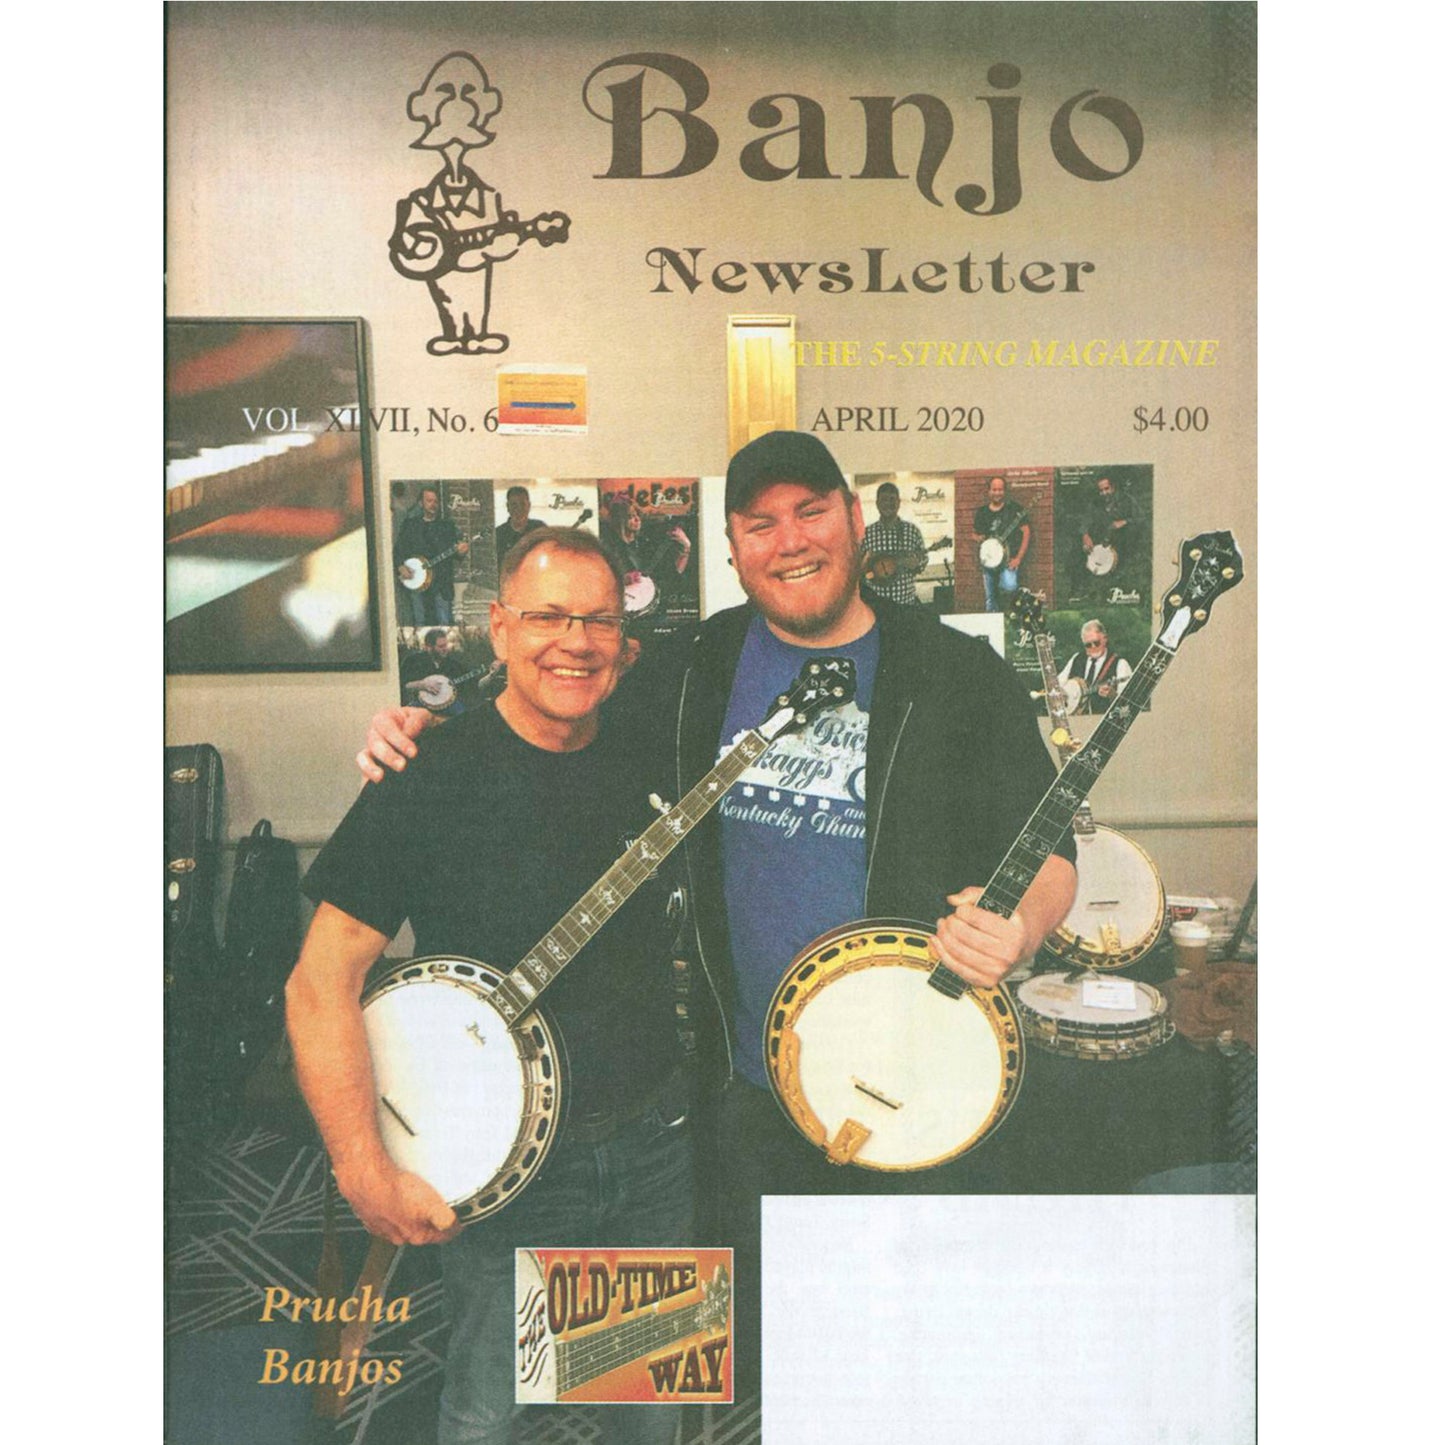 Image 1 of Banjo Newsletter - April 2020, Vol. XLVII, No. 6 - SKU# BN-202004 : Product Type Media : Elderly Instruments